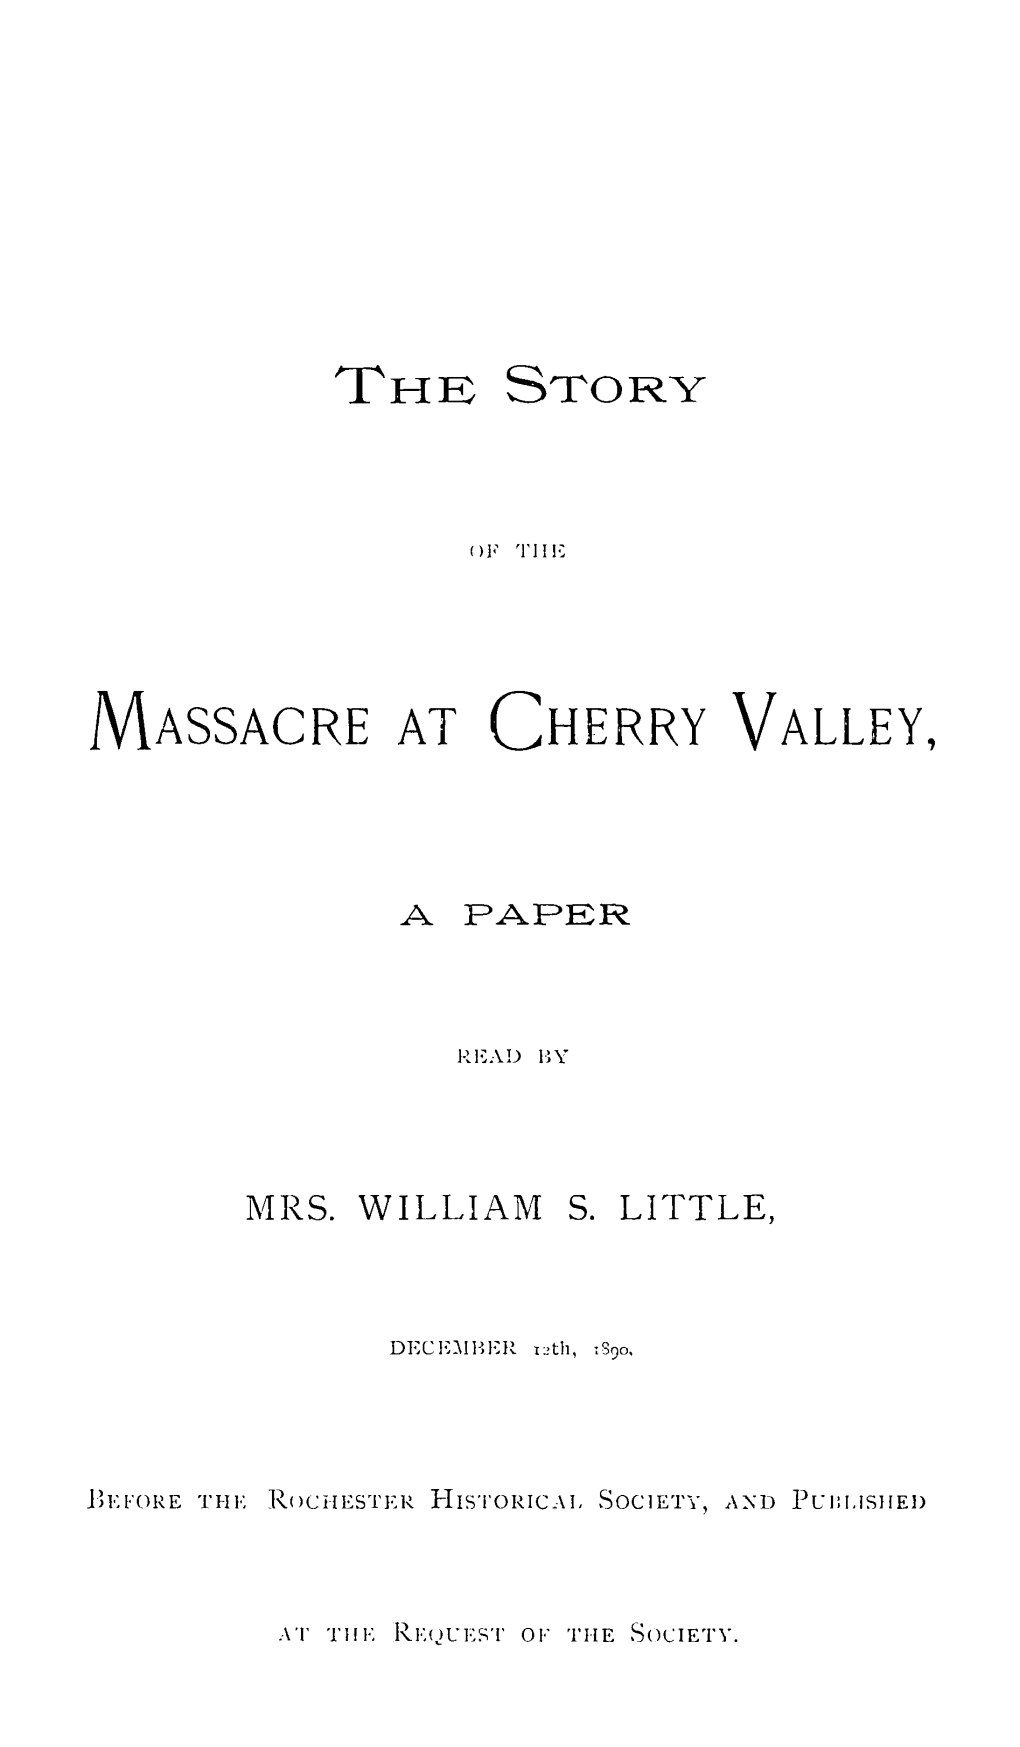 Massacre at Cherry Valley